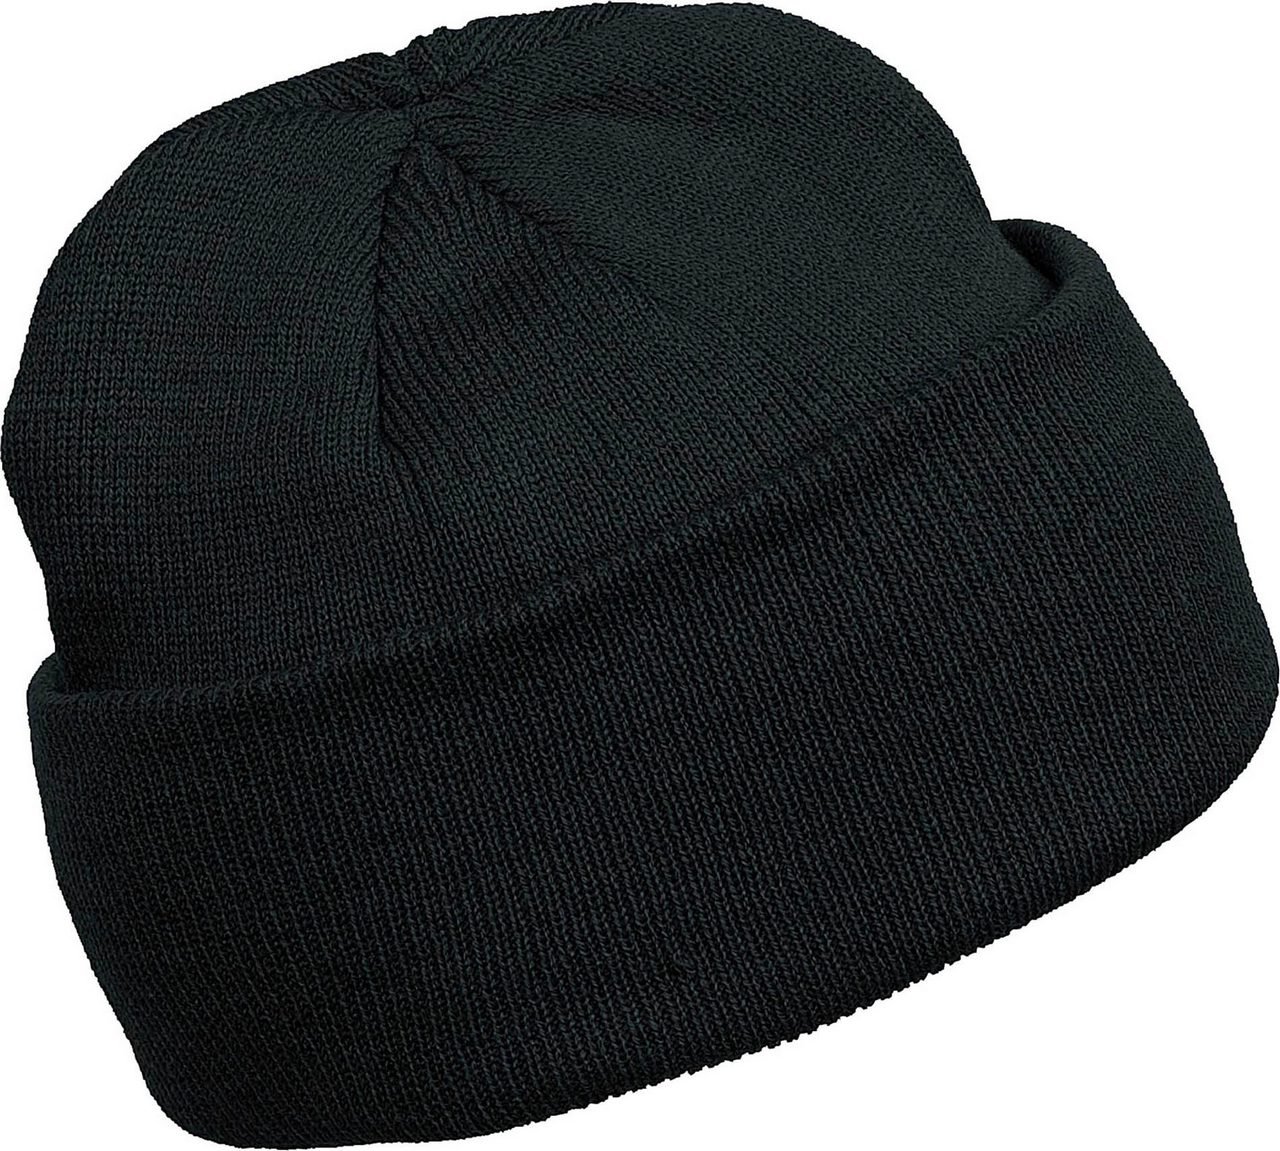  Caciula Knittedknitted-hat-3082.jpg